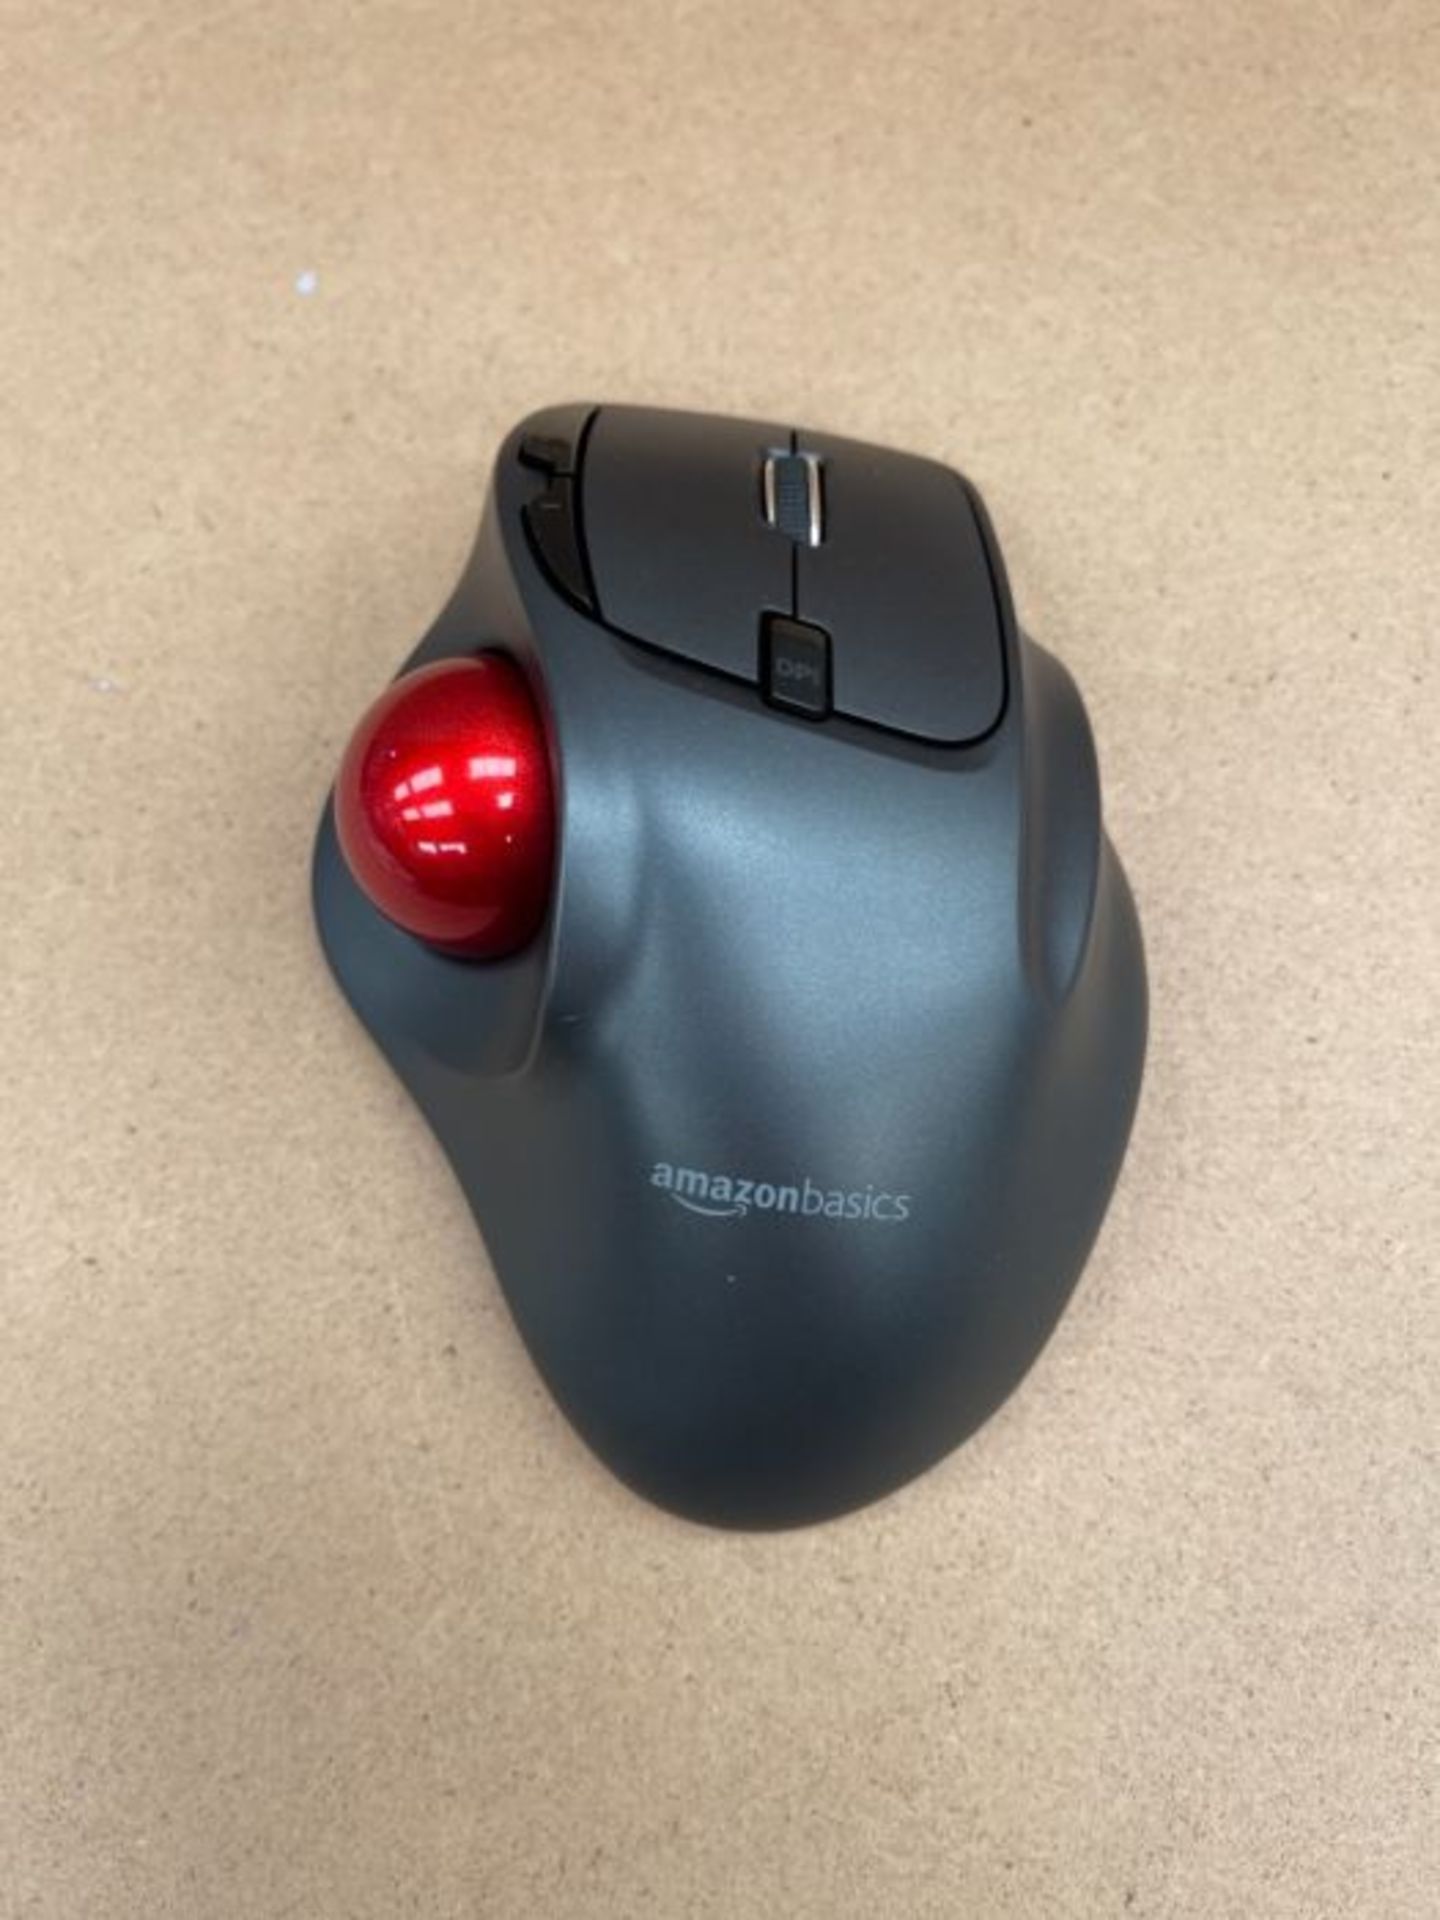 Amazon Basics Wireless Trackball Mouse - Image 2 of 2